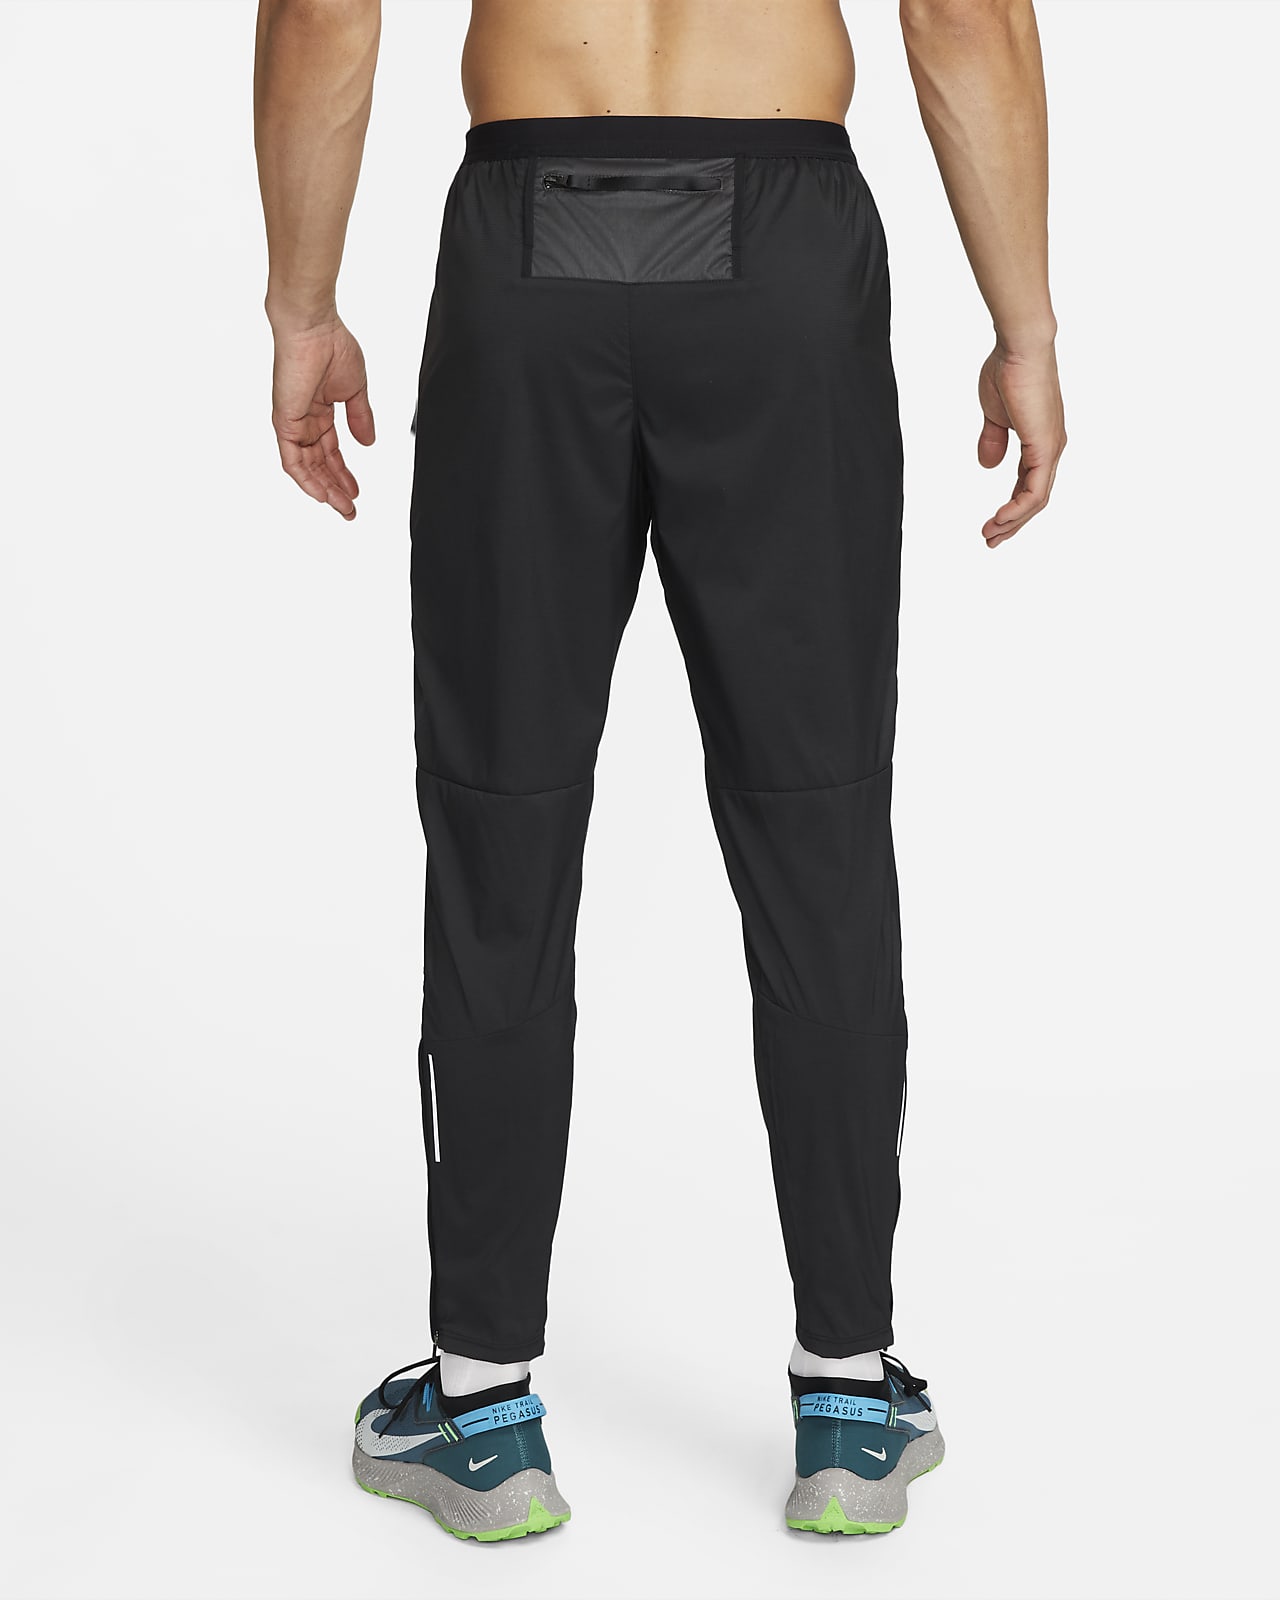 Nike Storm-fit Phenom Elite Stretched Leggings in Black for Men